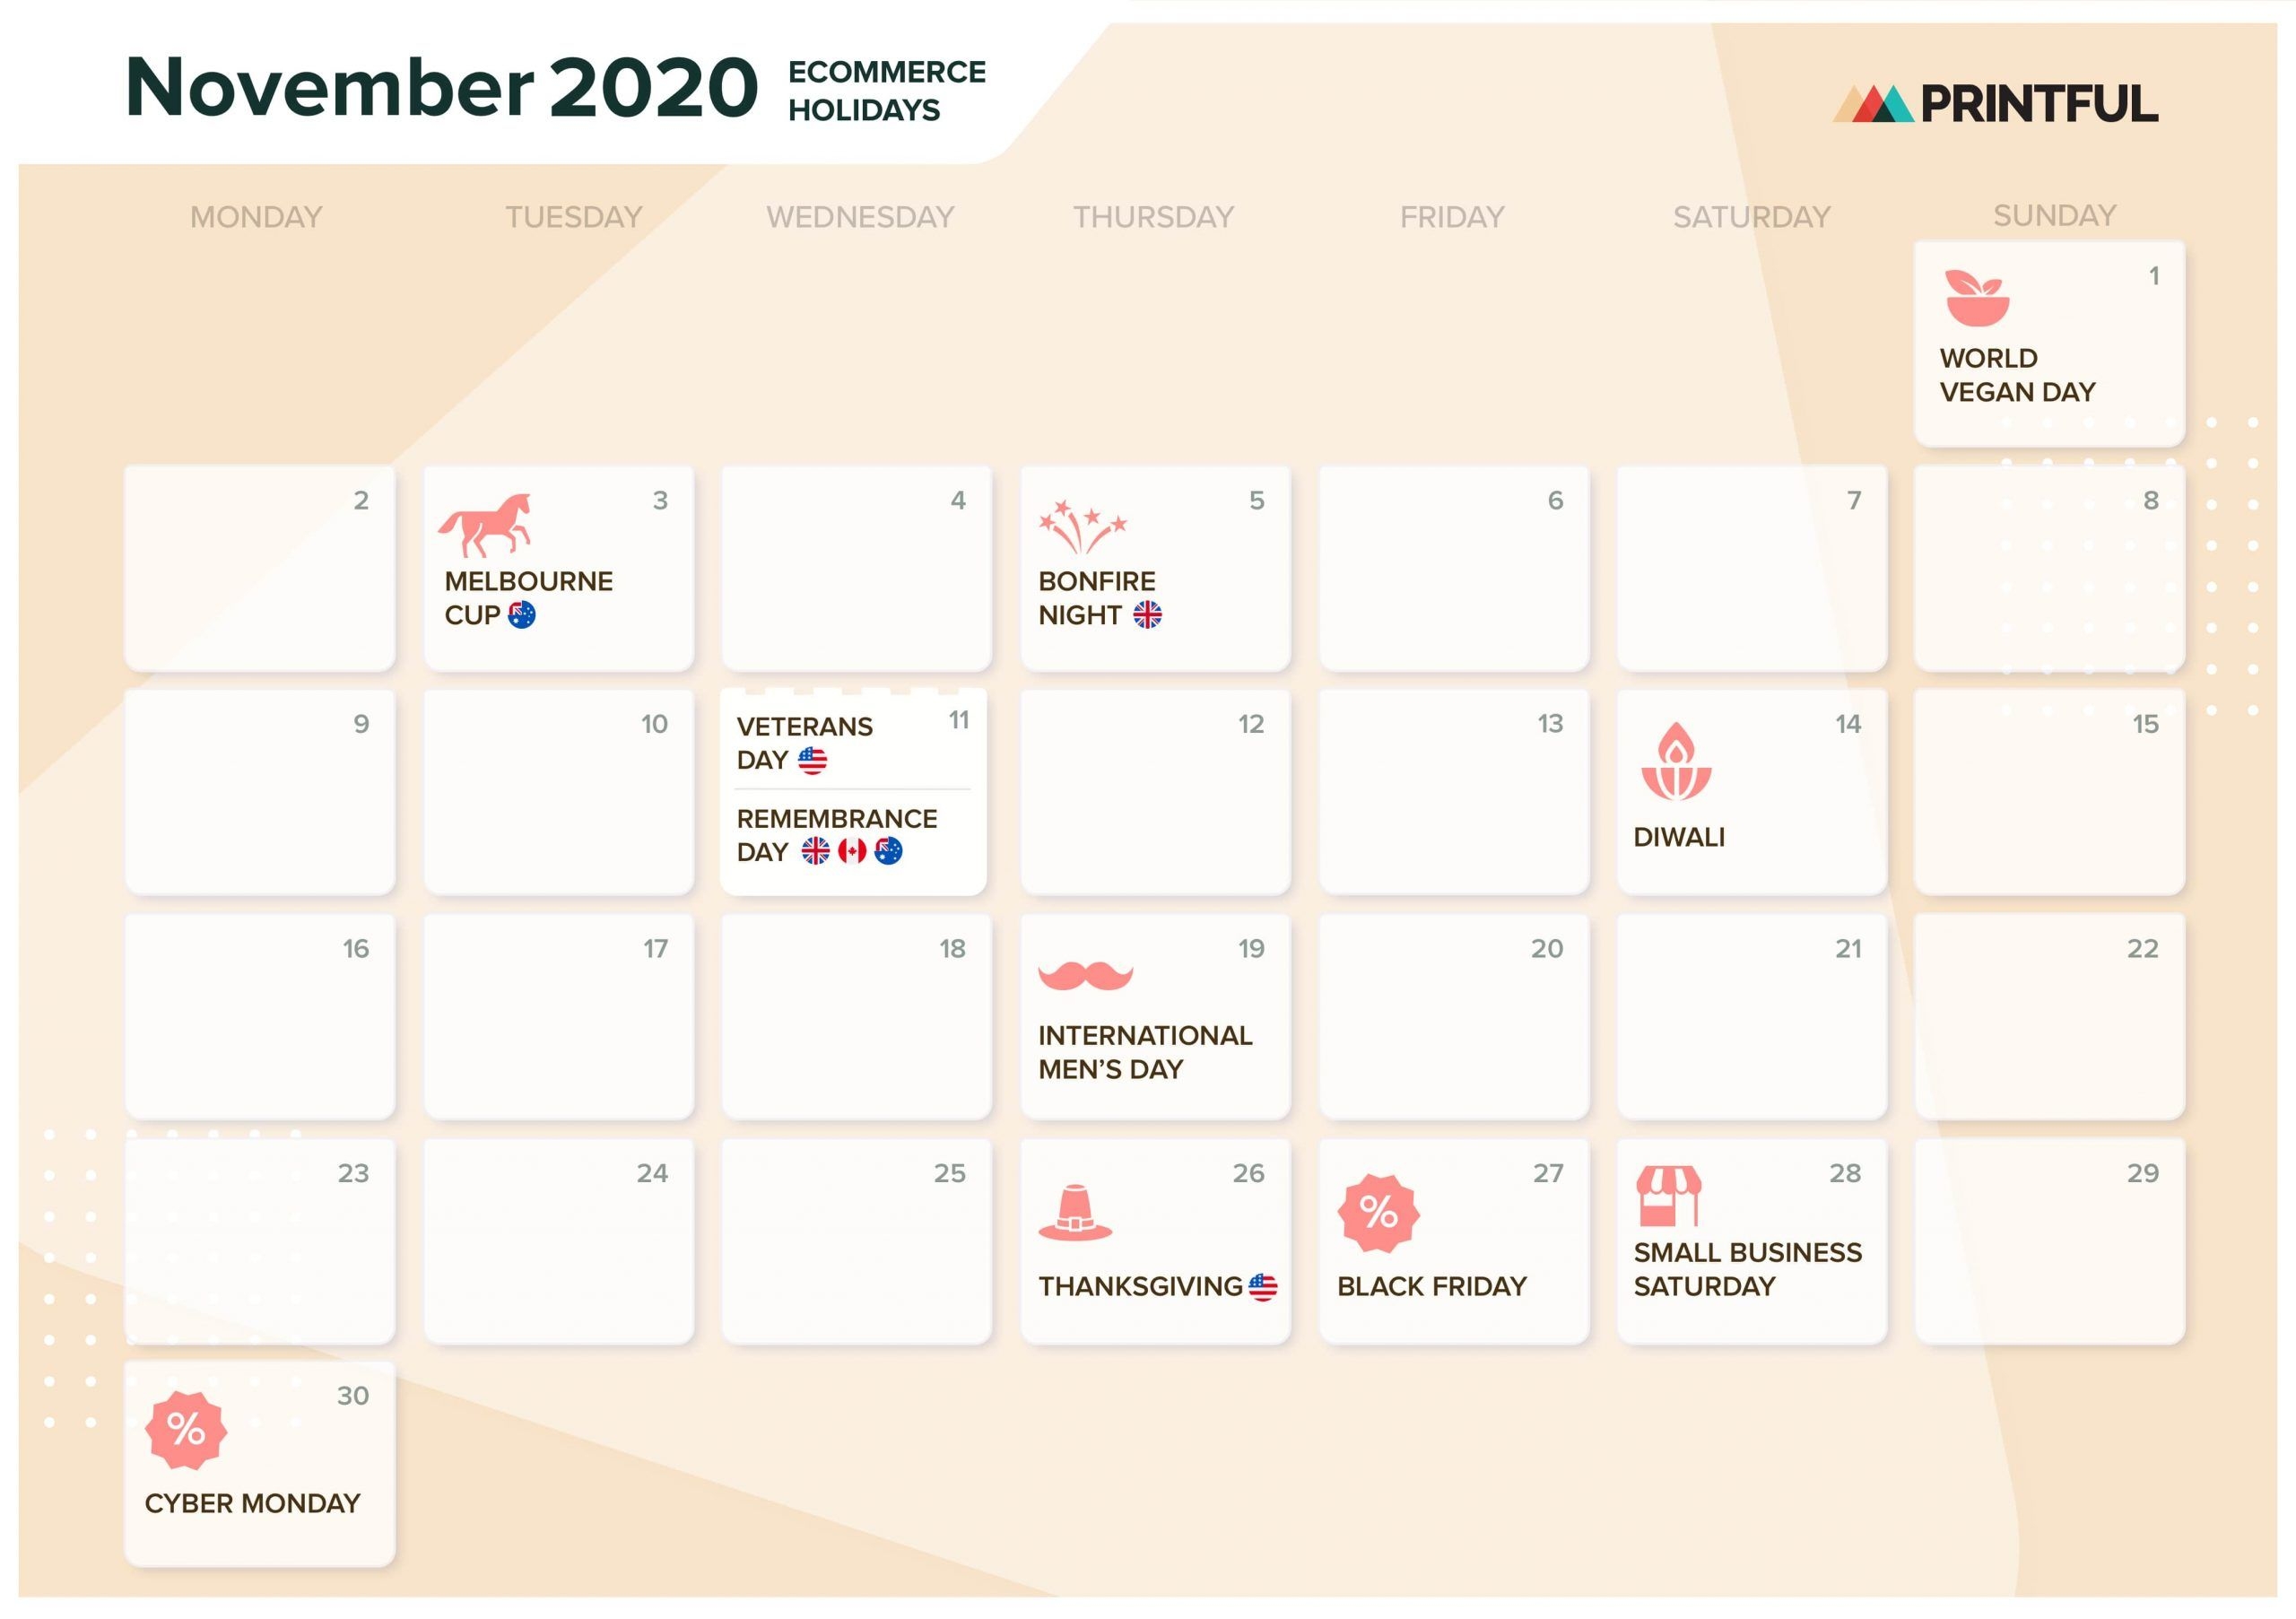 The Ultimate 2020 Ecommerce Holiday Marketing Calendar